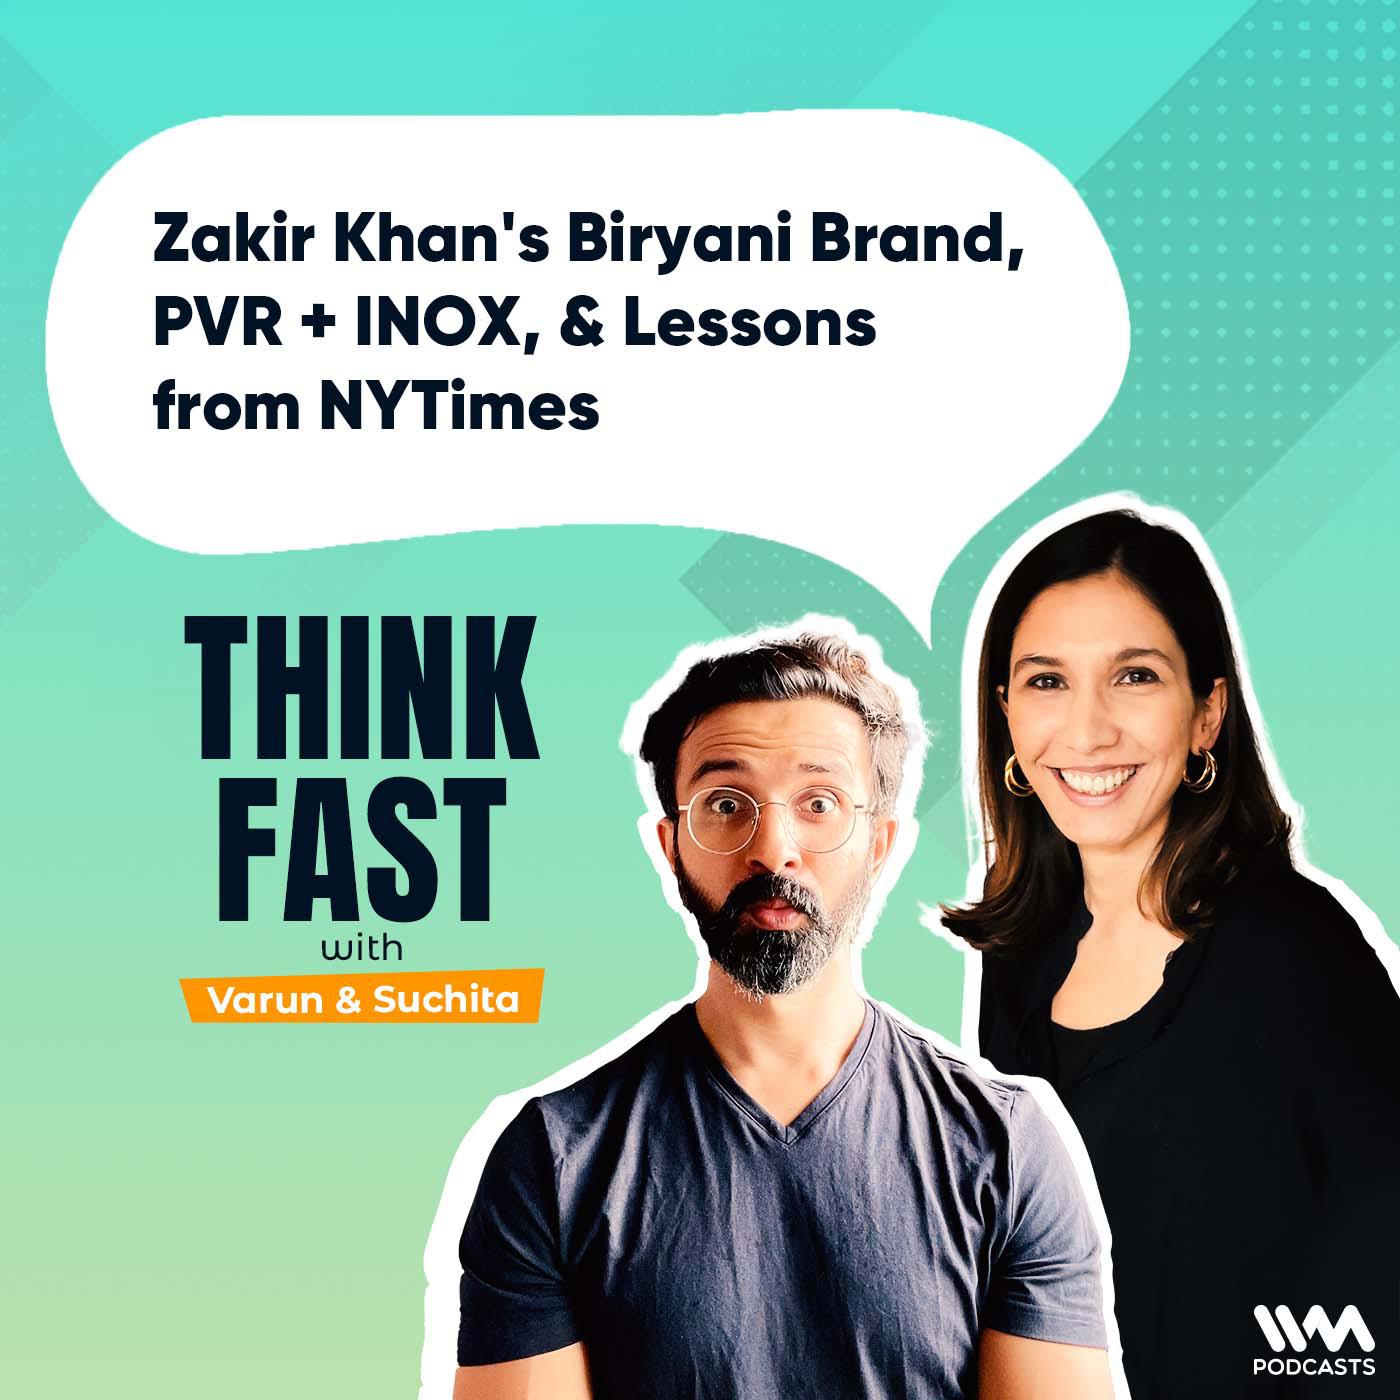 Zakir Khan's Biryani Brand, PVR + INOX, & Lessons from NYTimes